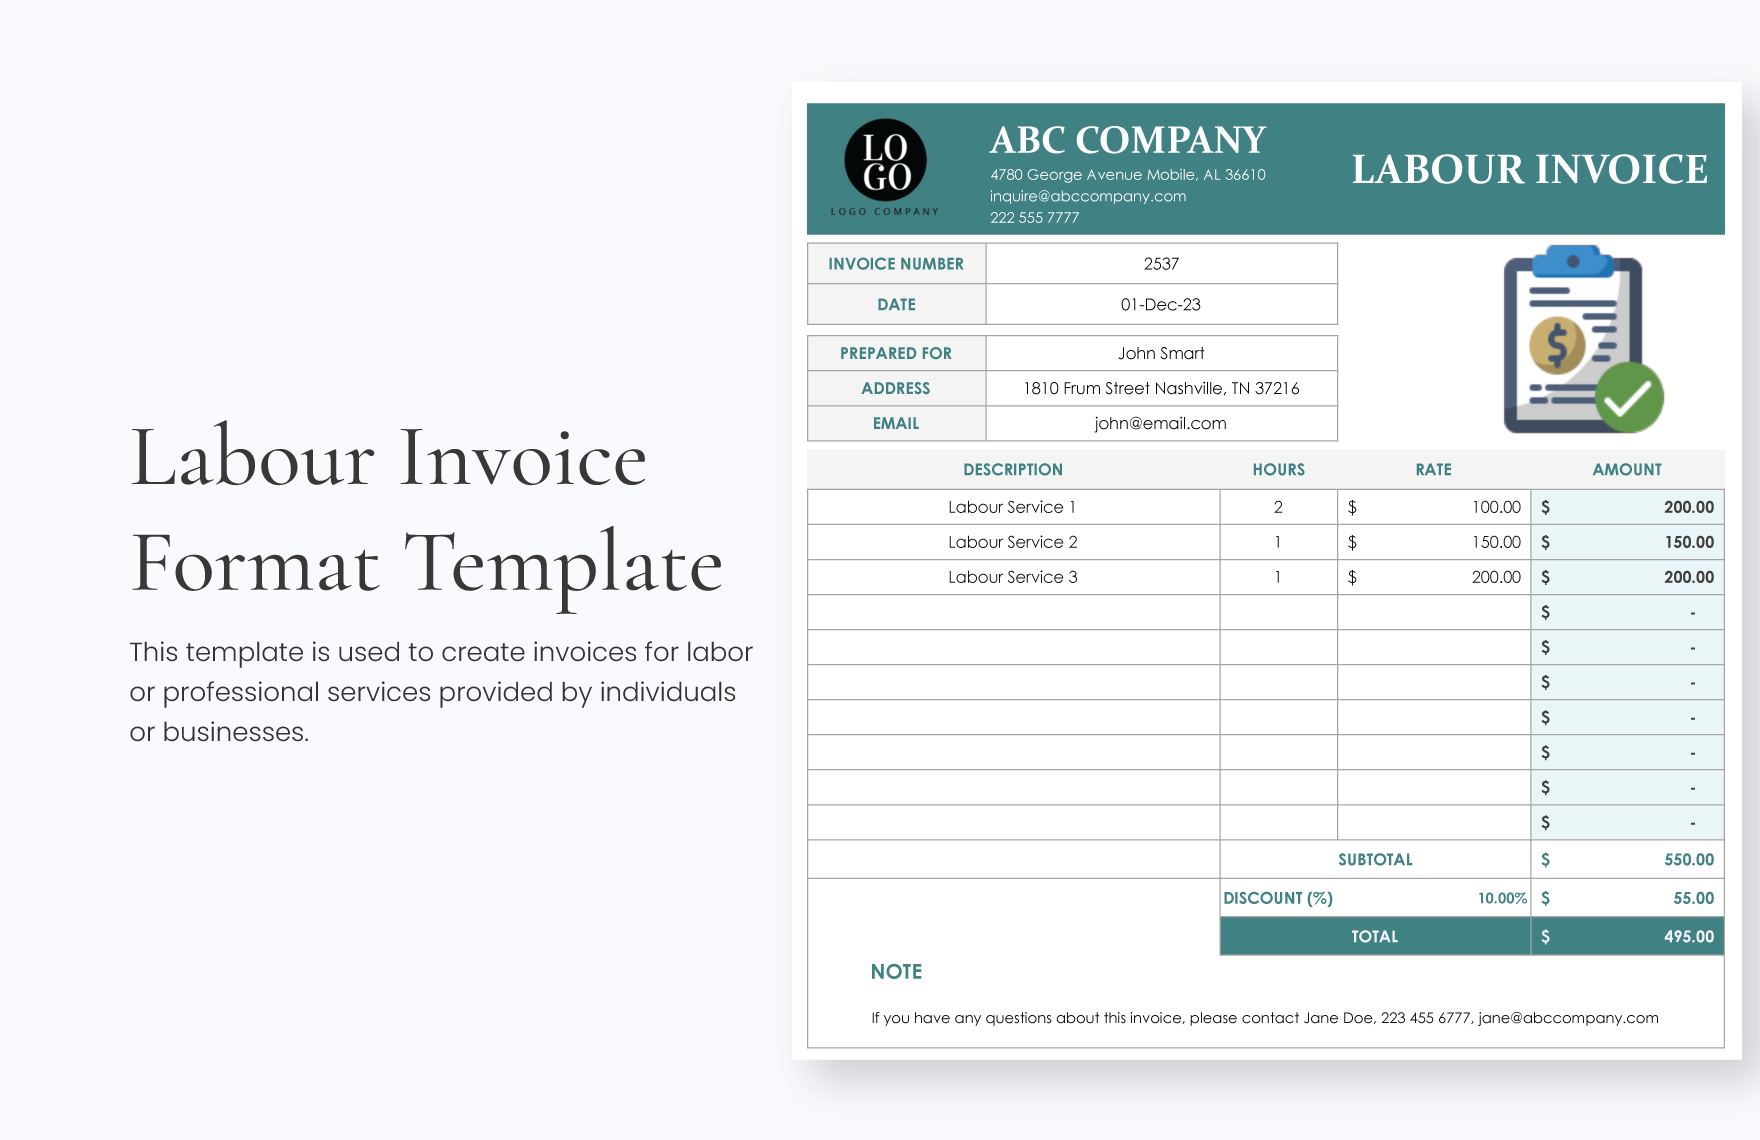 Labour Invoice Format Template